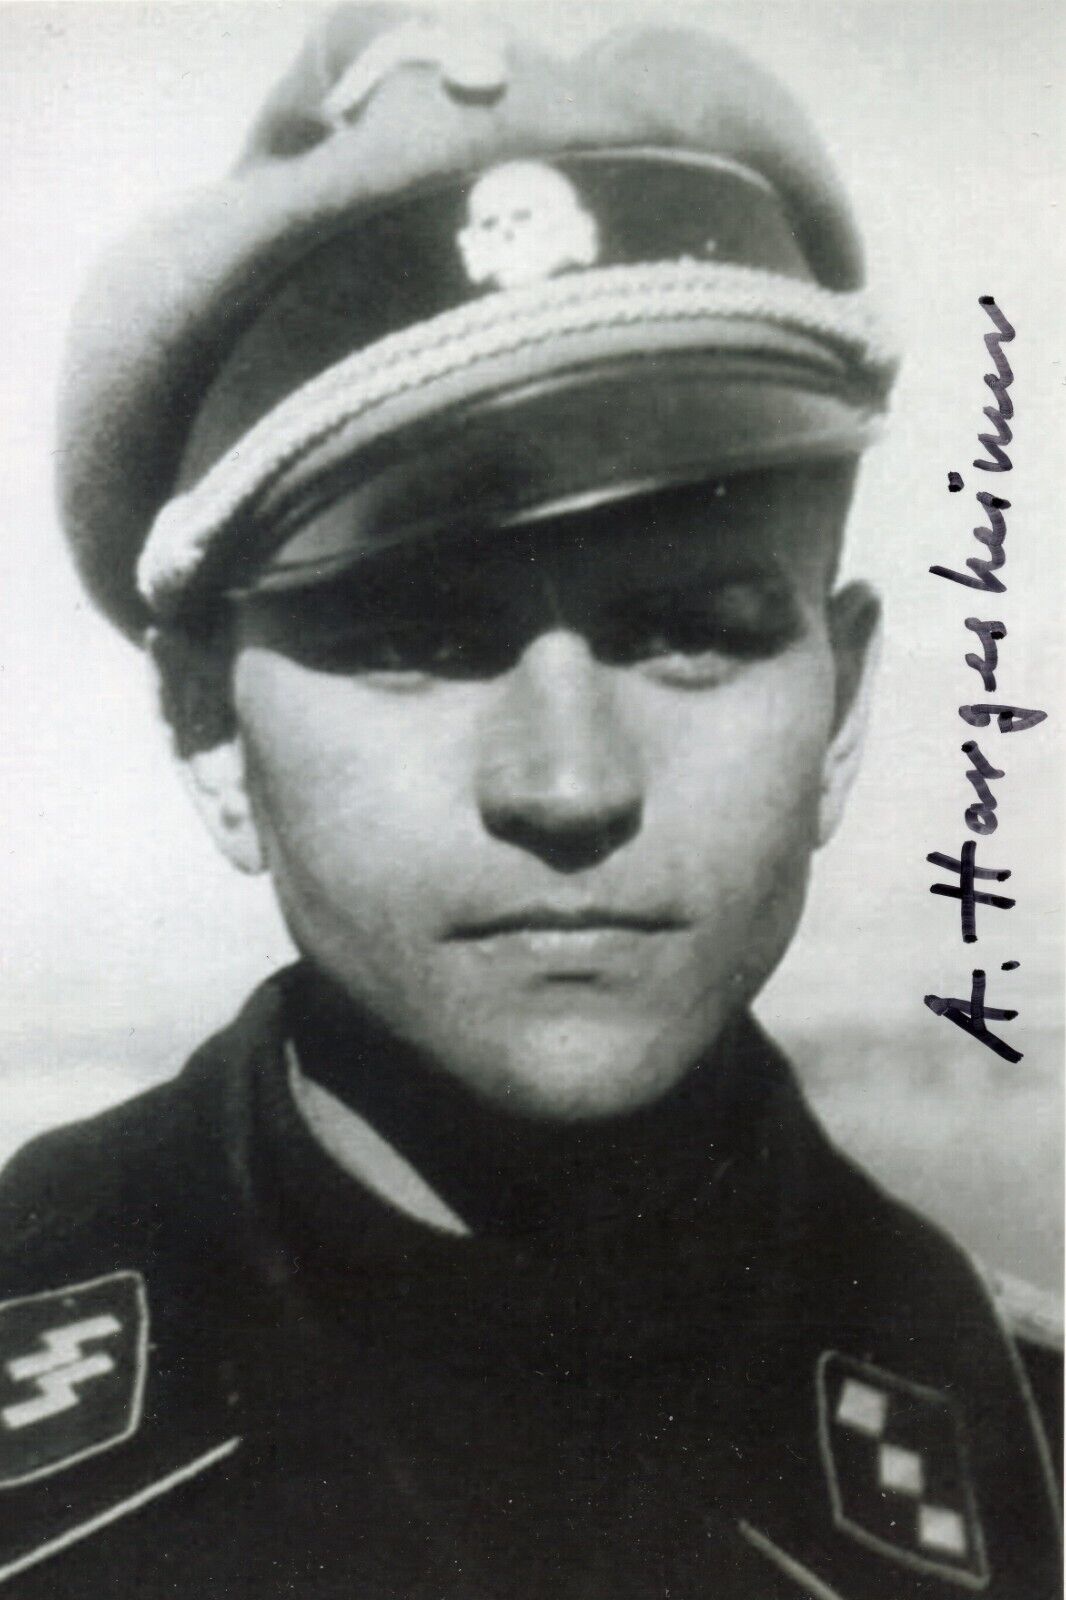 ALFRED HARGESHEIMER - Elite pz. commander - hand-signed photo, rare